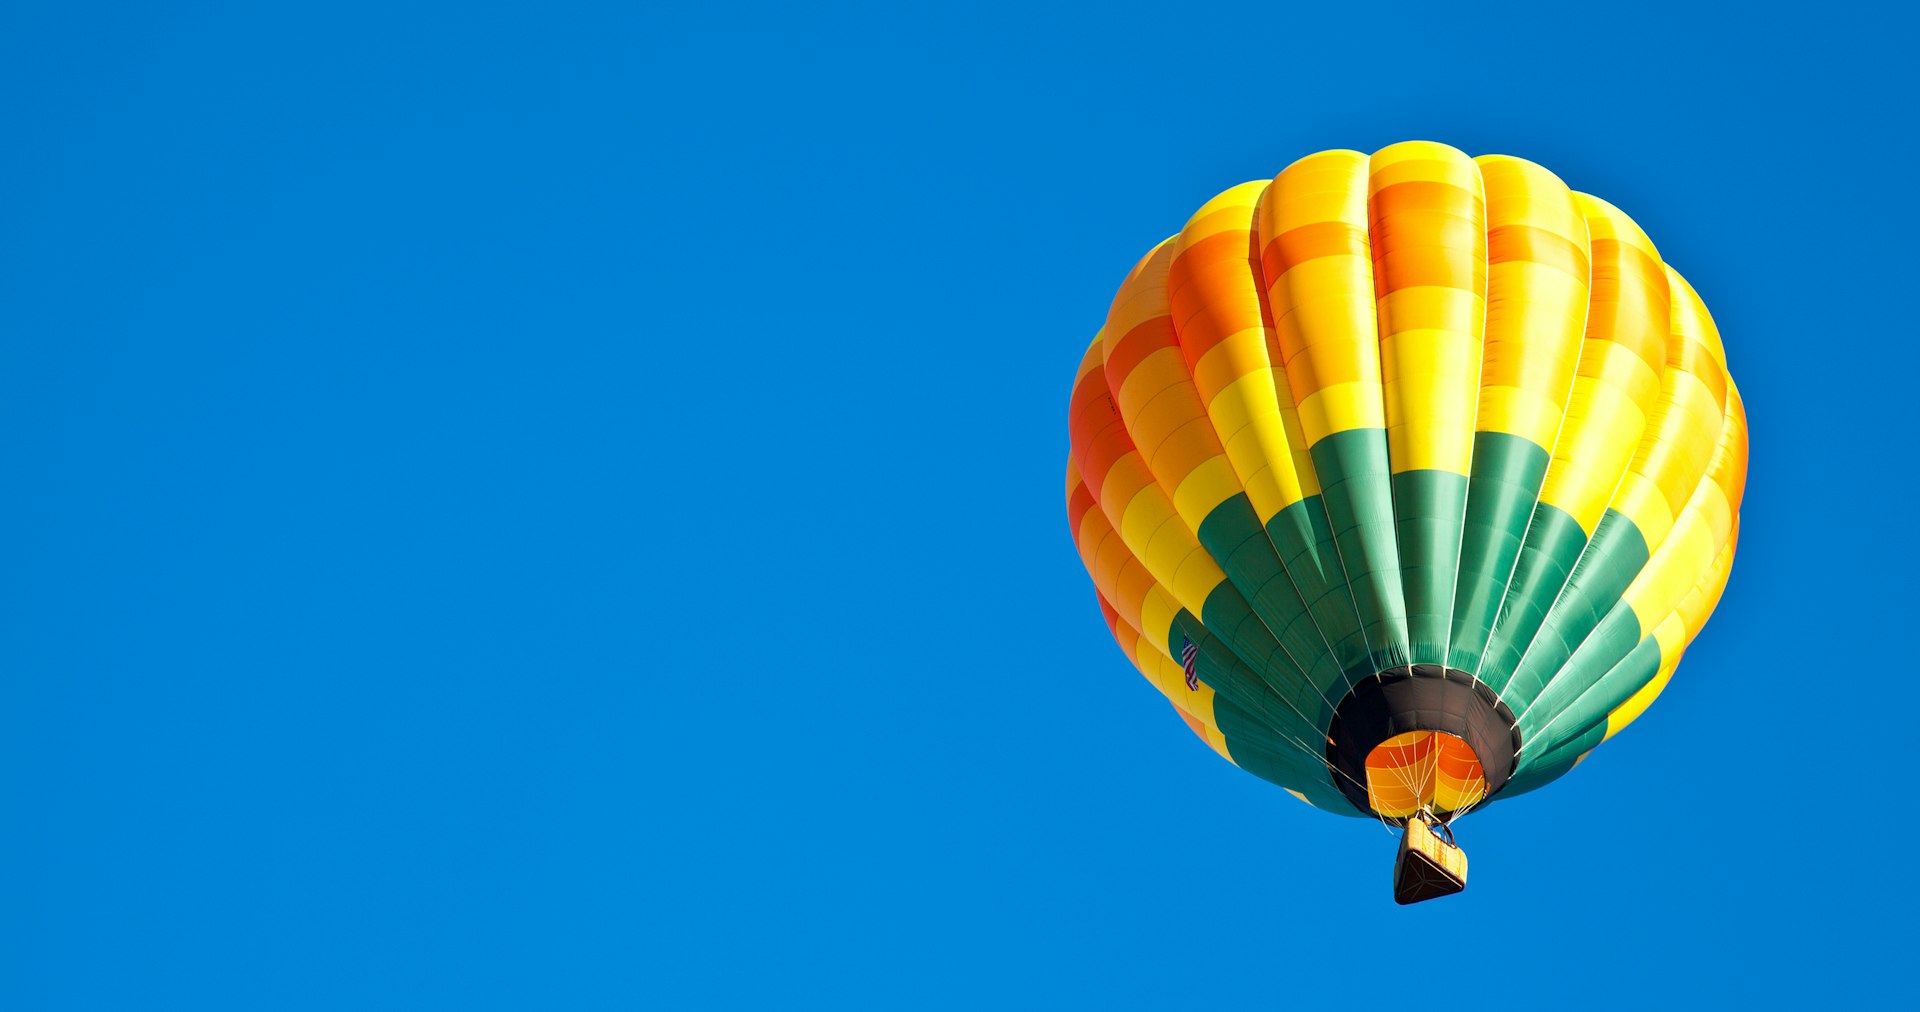 Features - Balloons in Flight